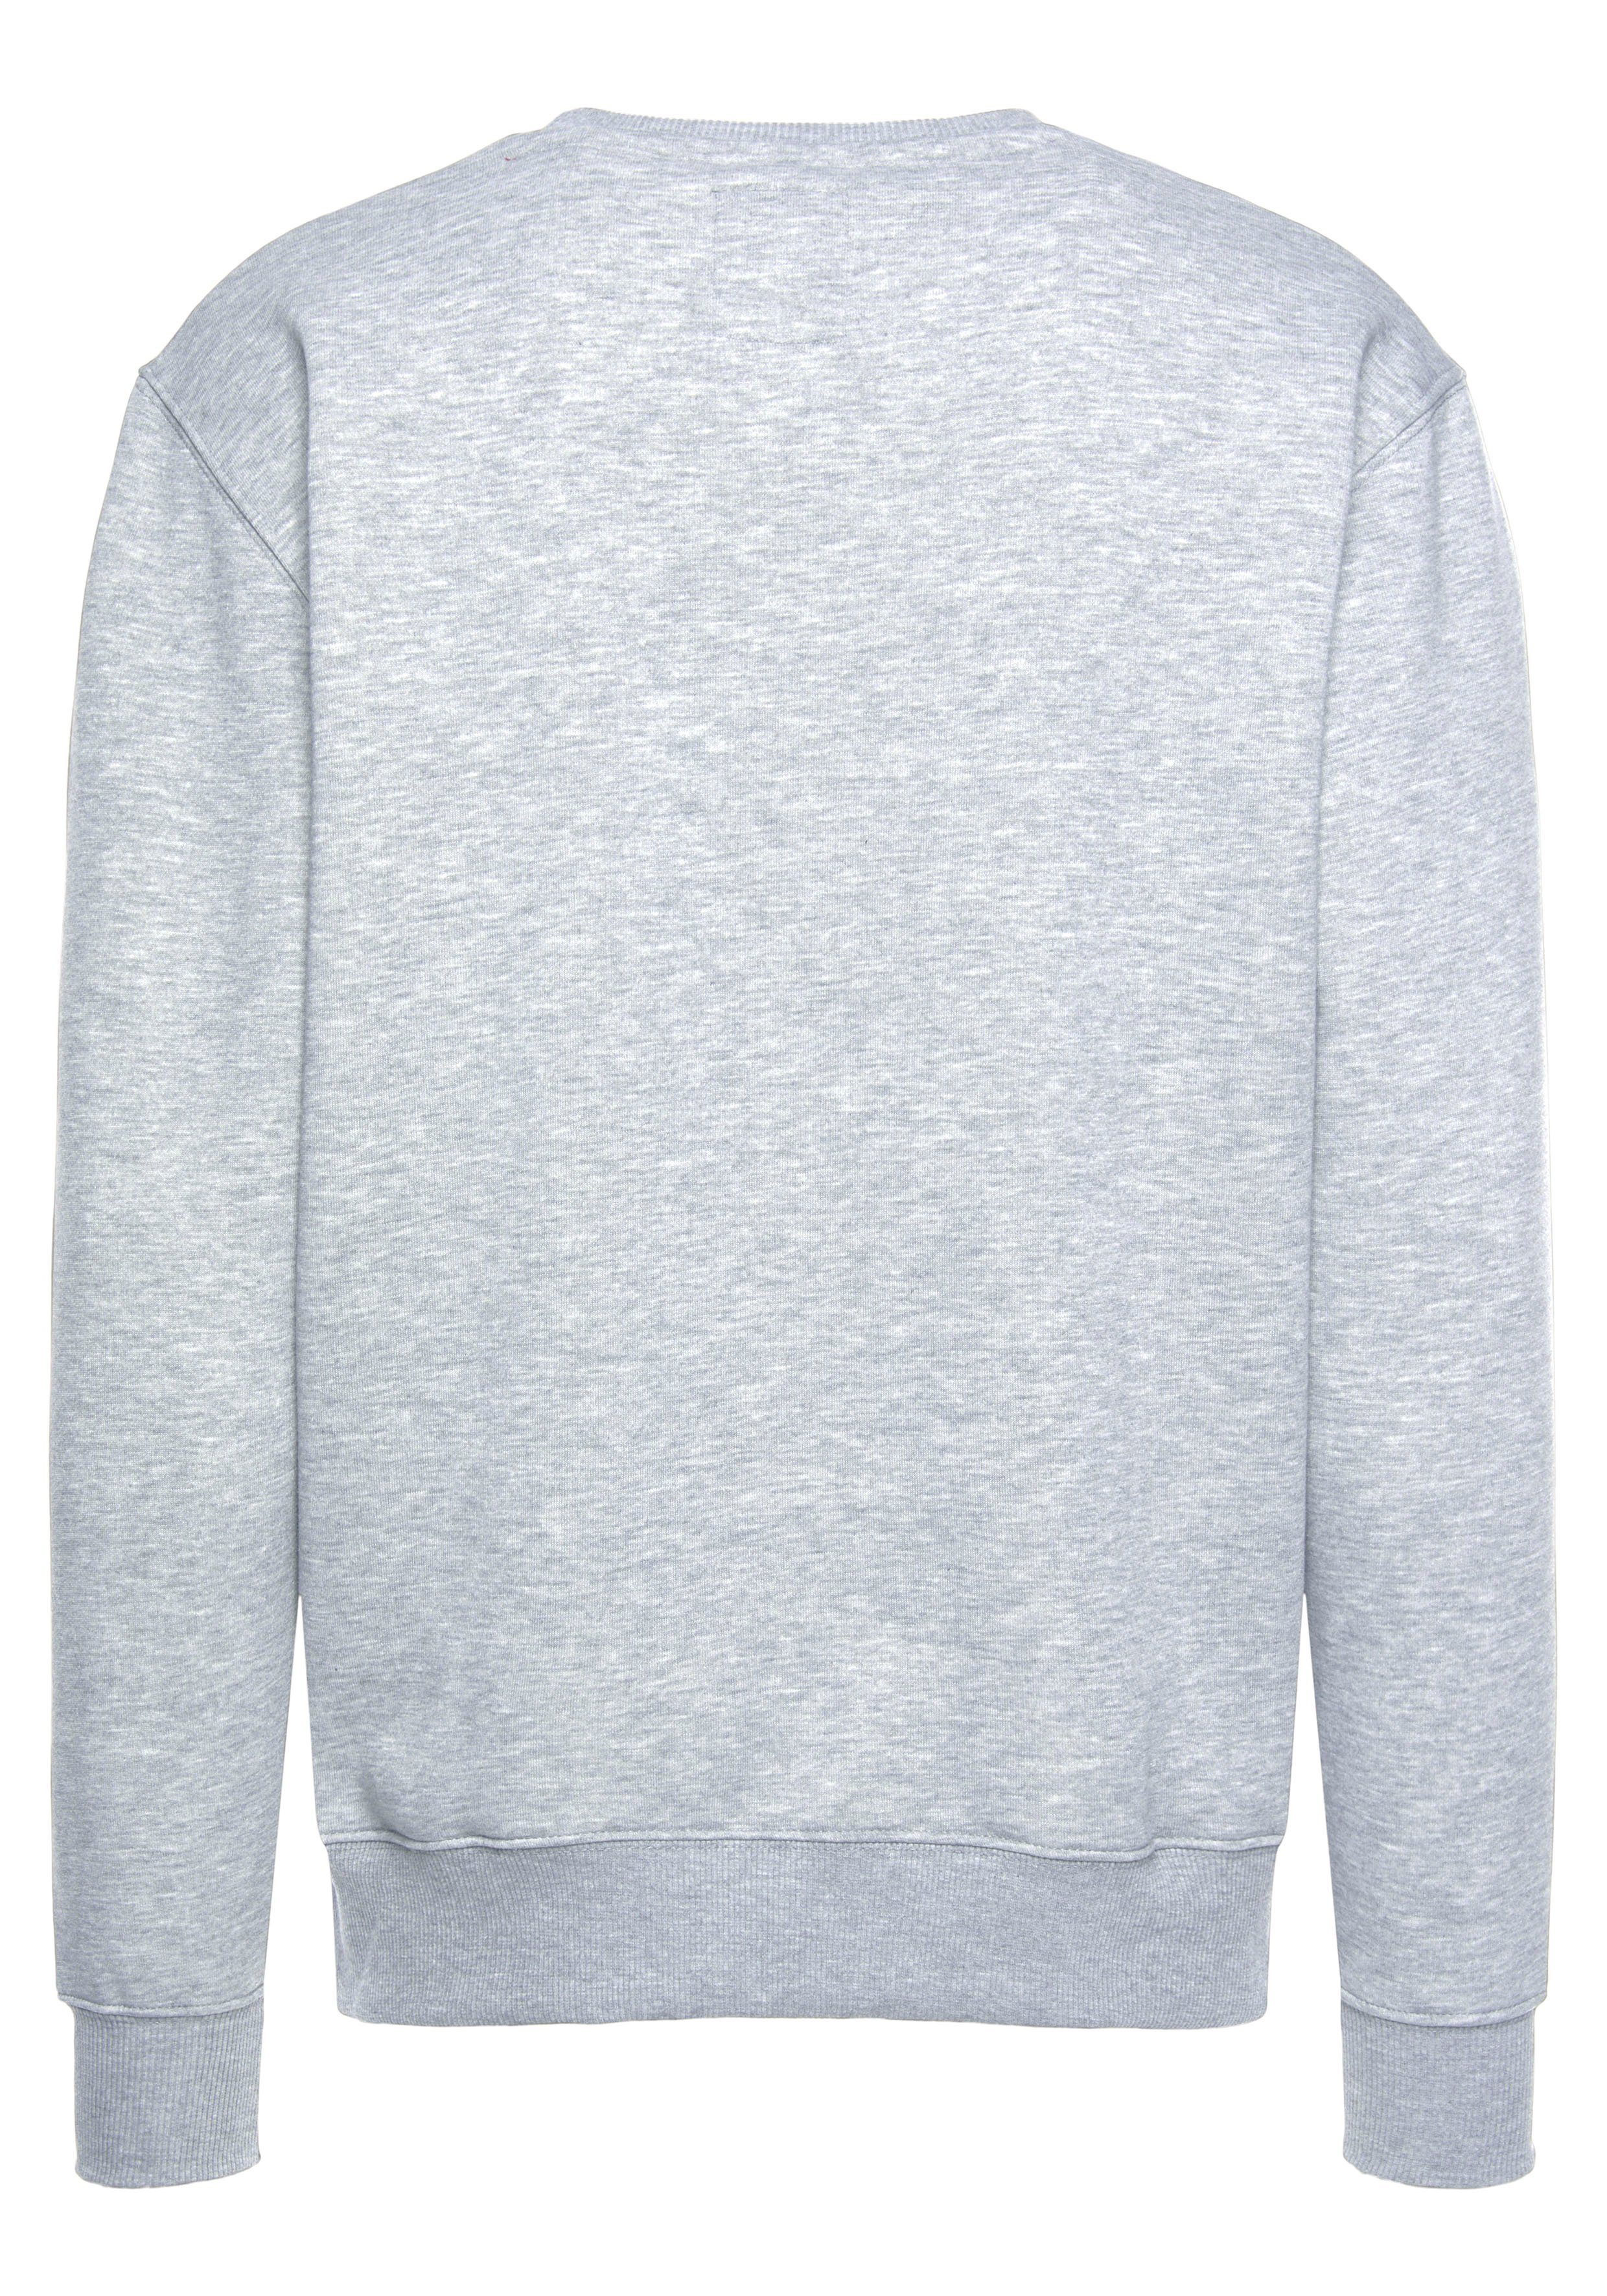 Sweatshirt Basic grey Sweater Industries heather Alpha